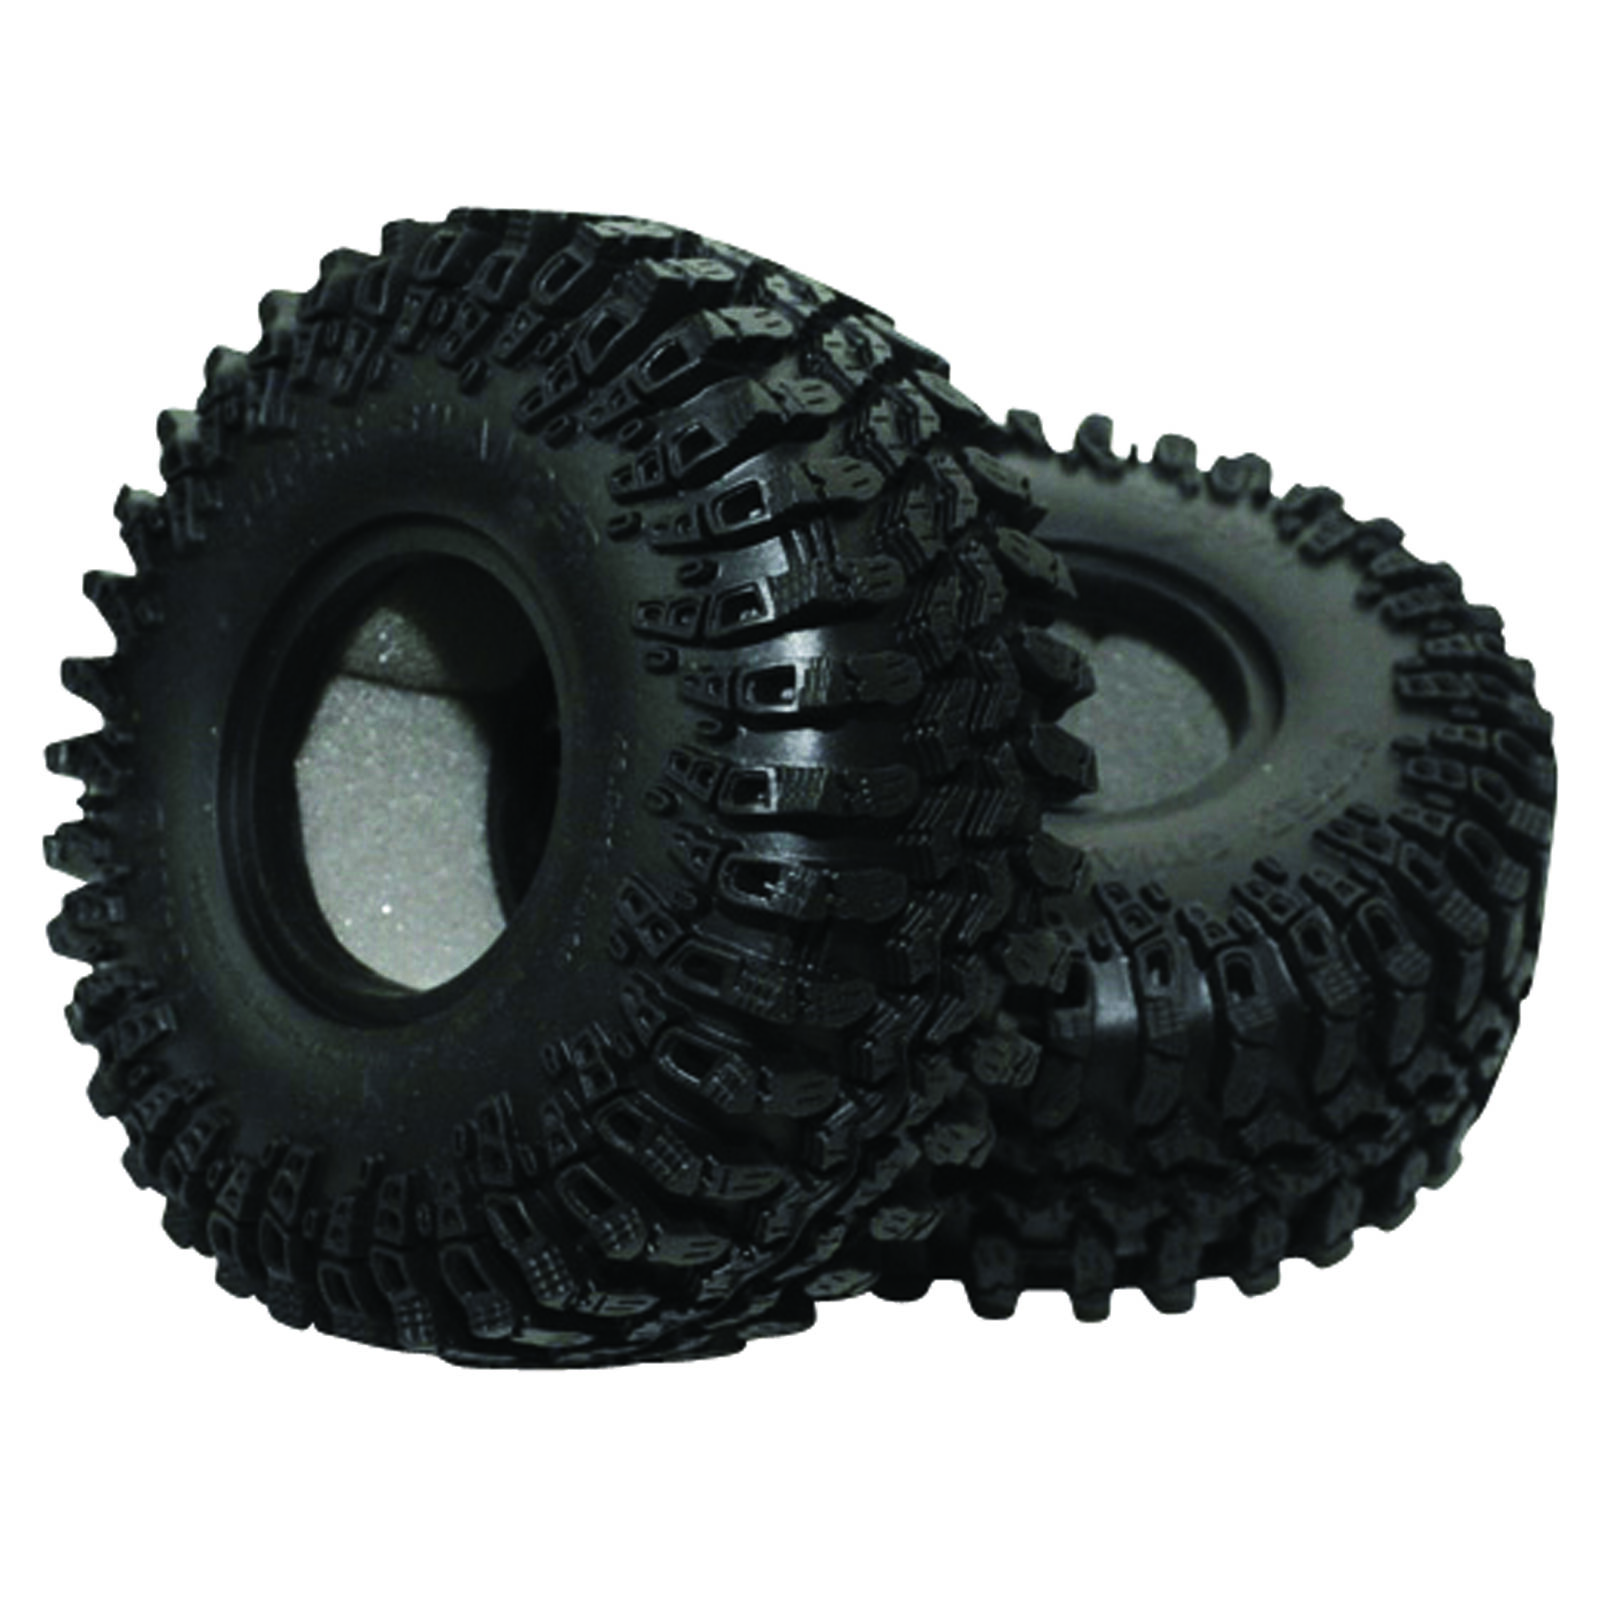 Interco IROK 1.9 Scale Crawler Tire